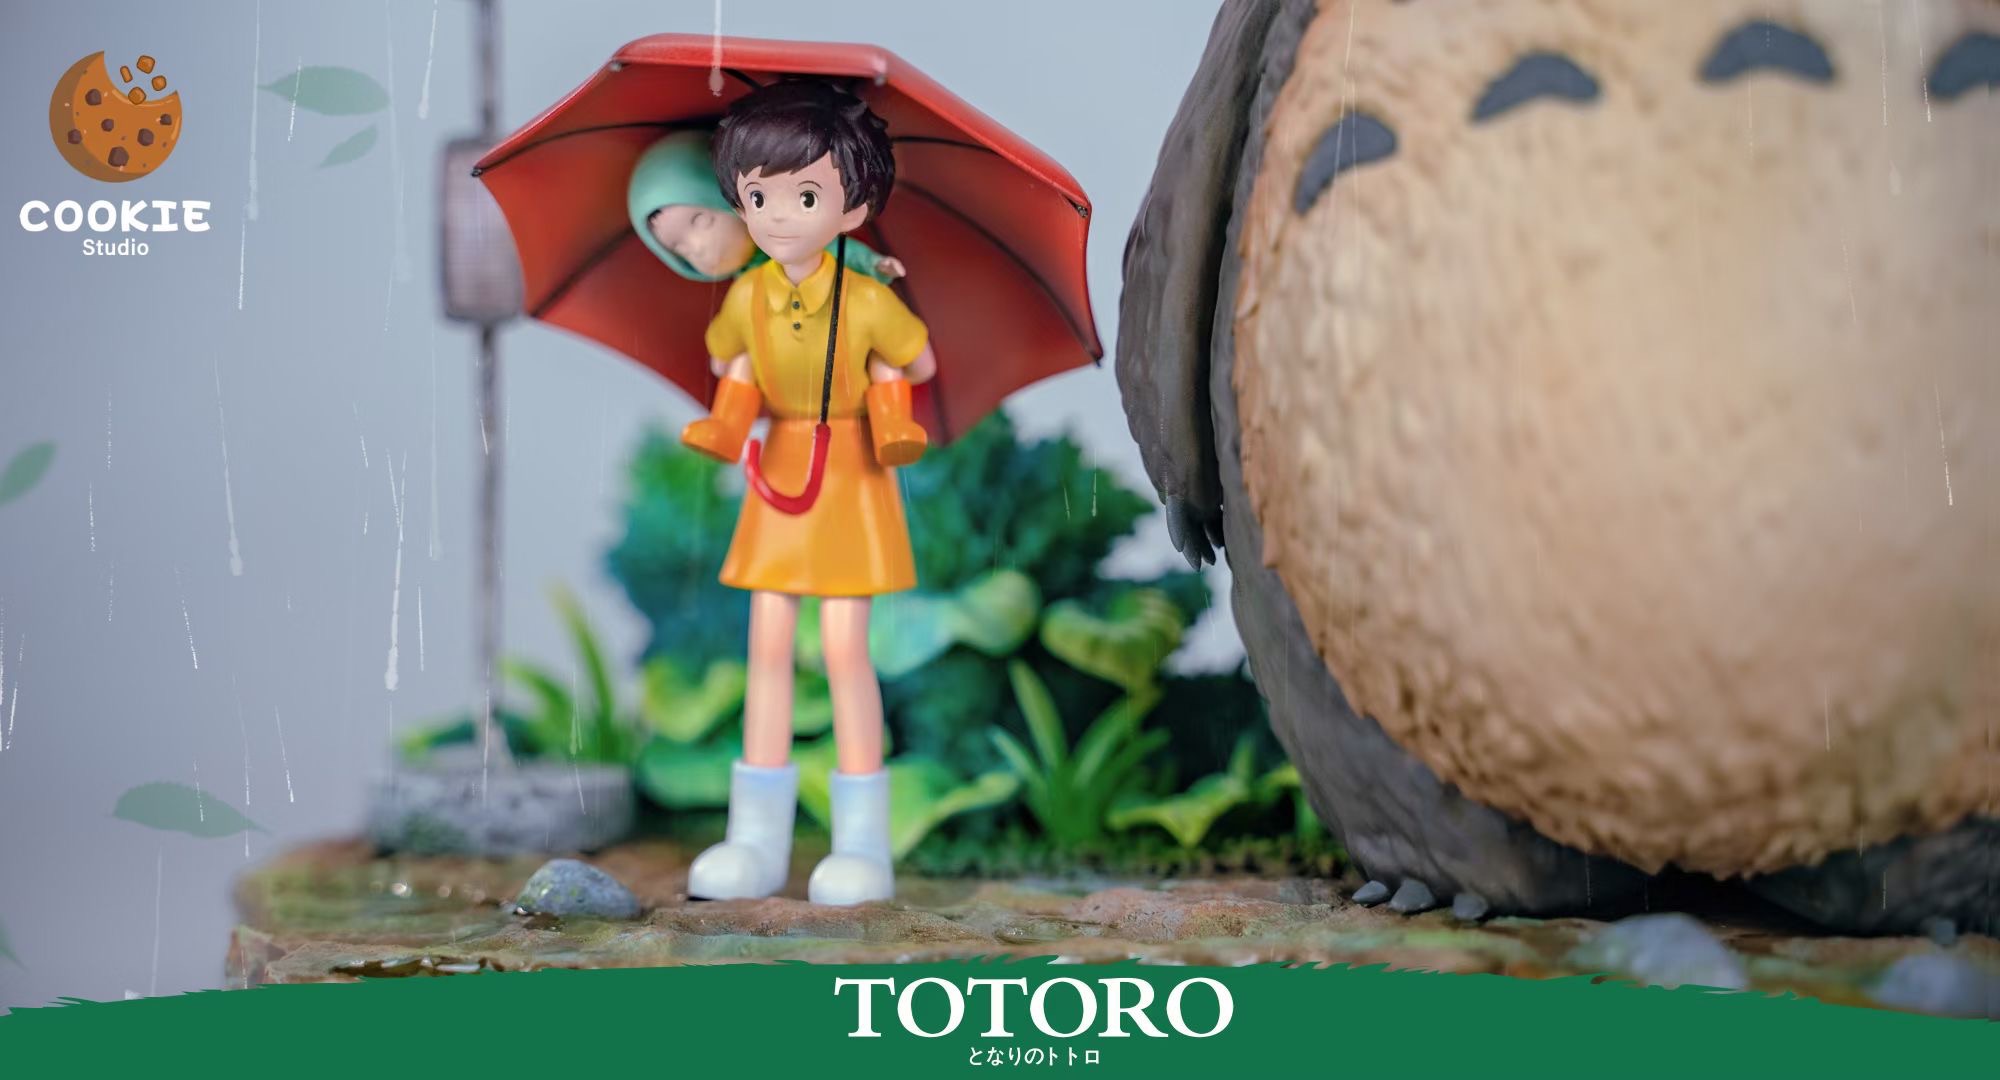 Totoro โทโทโร่ Cookie Studio (มัดจำ) [[ SOLDOUT ]]